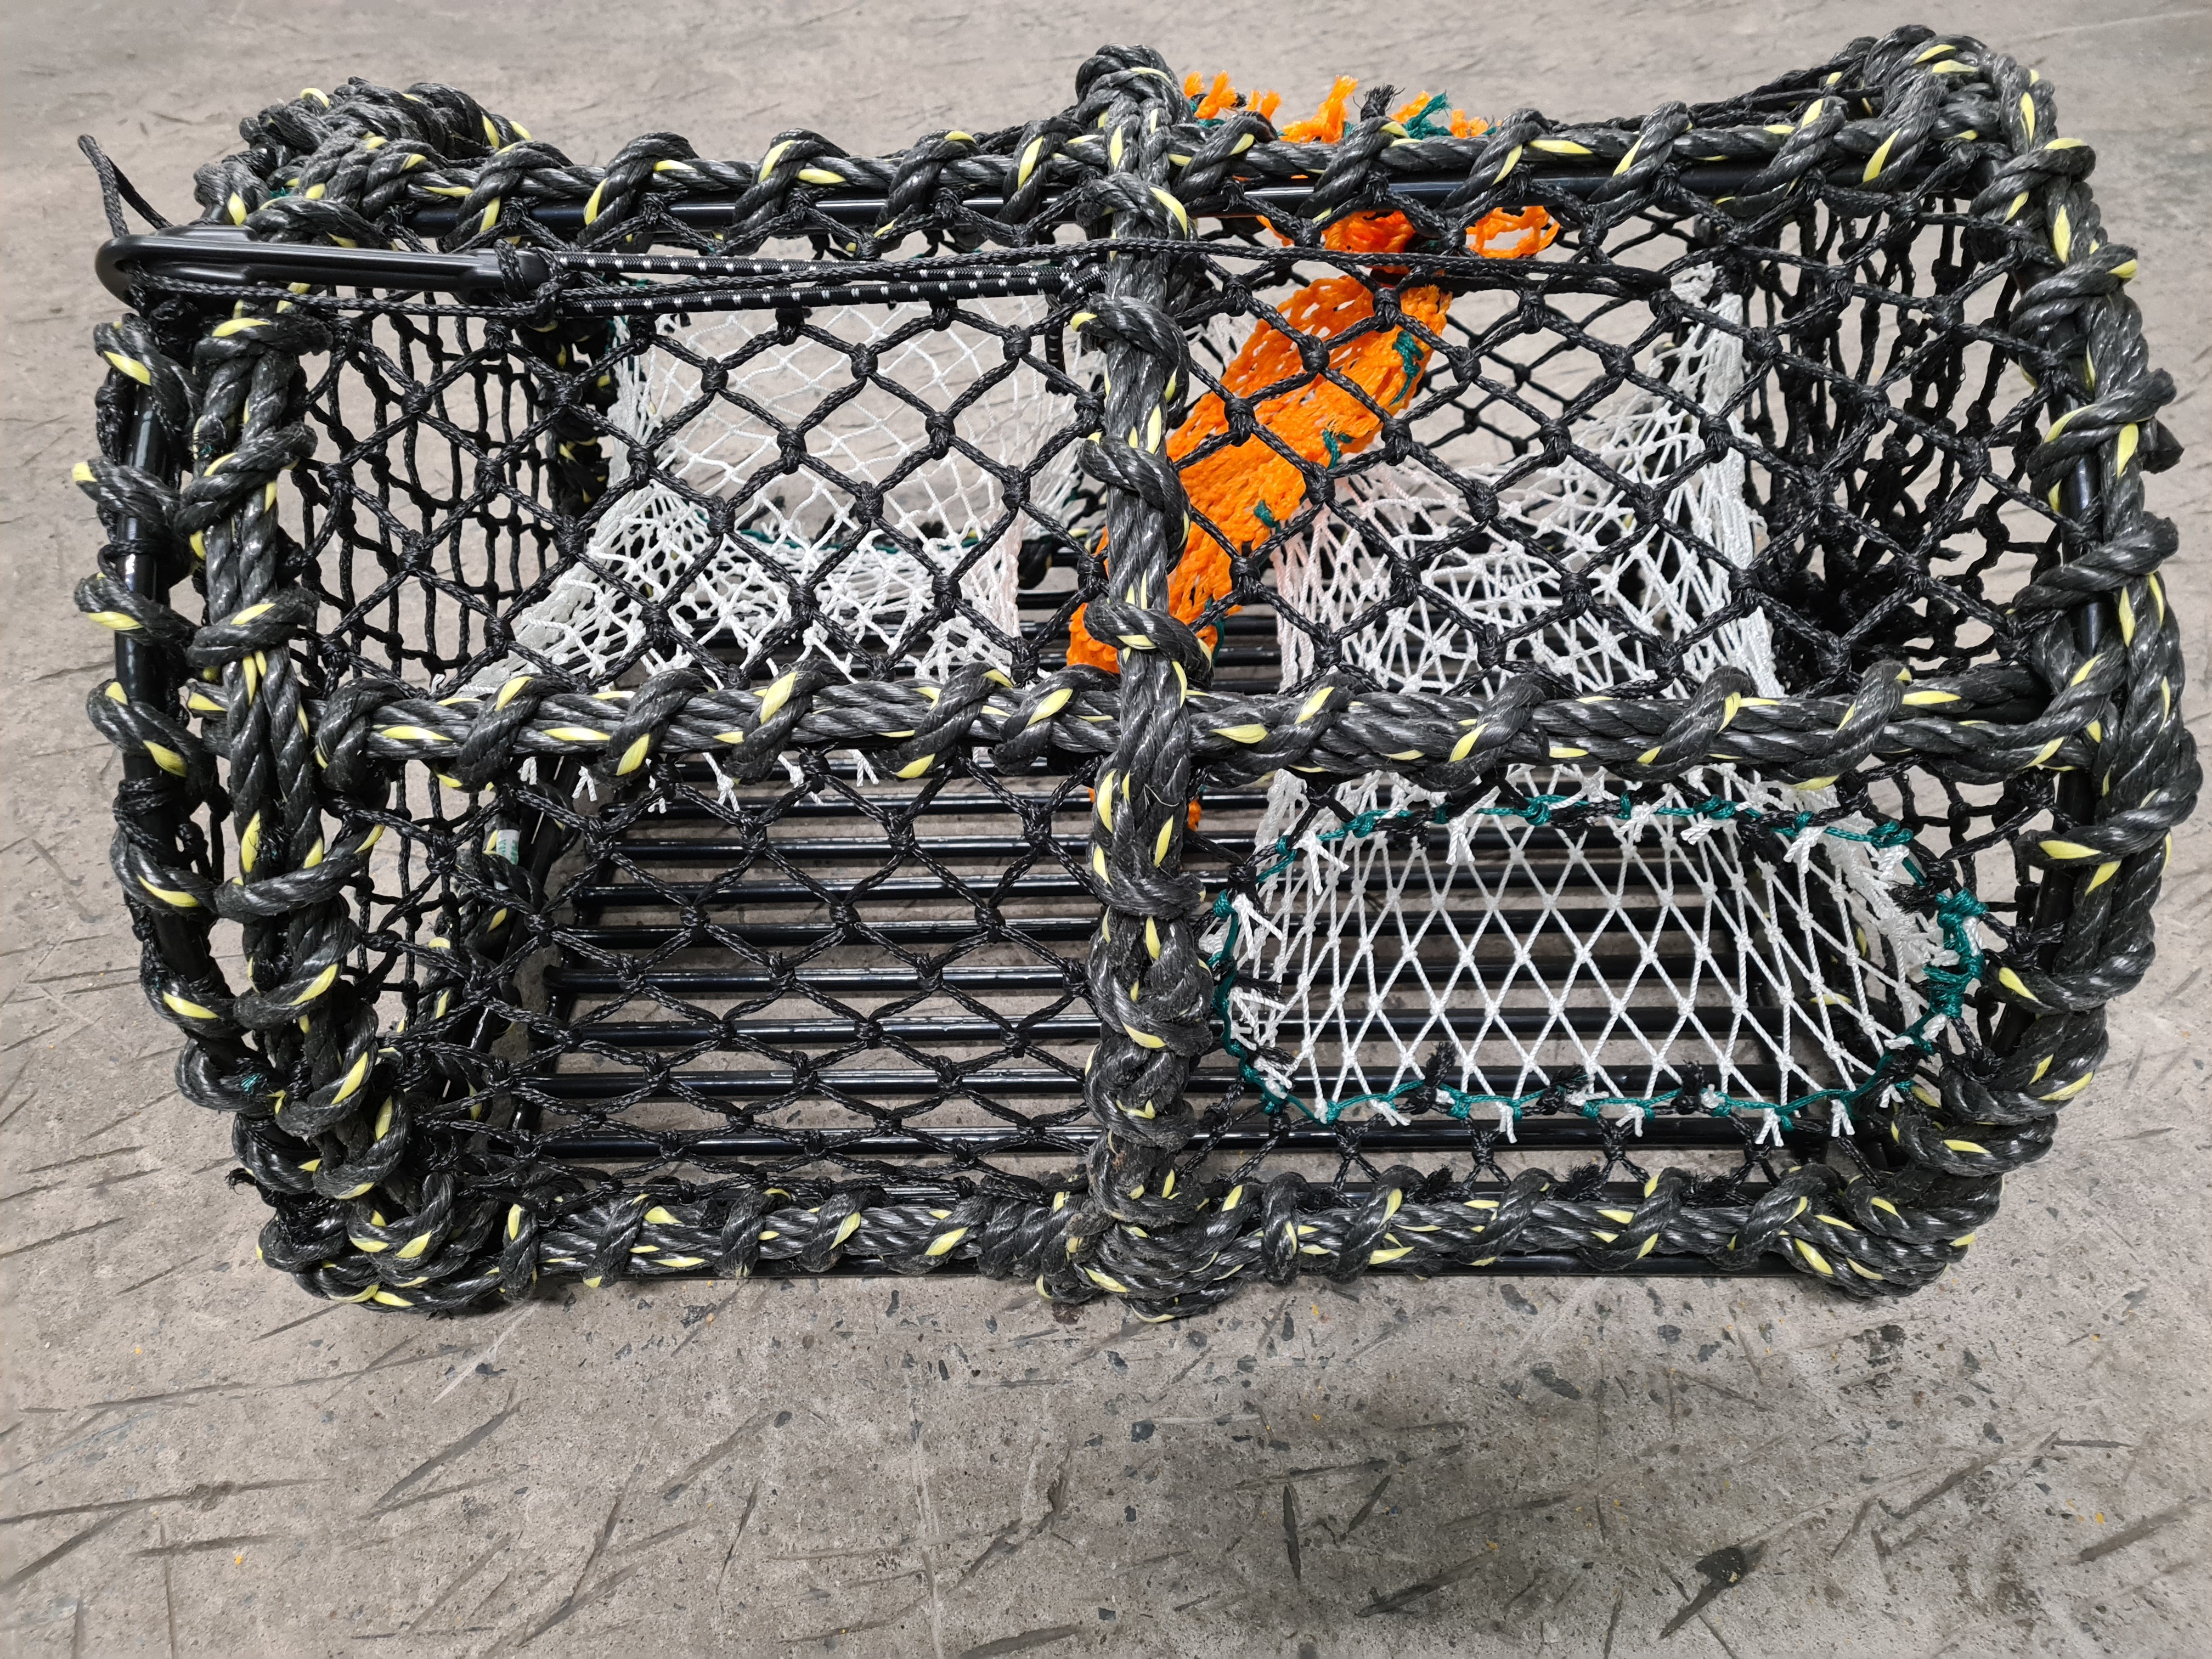 4mm Black Braided Pot Netting Fishing Trawler Nets  FREE DELIVERY 